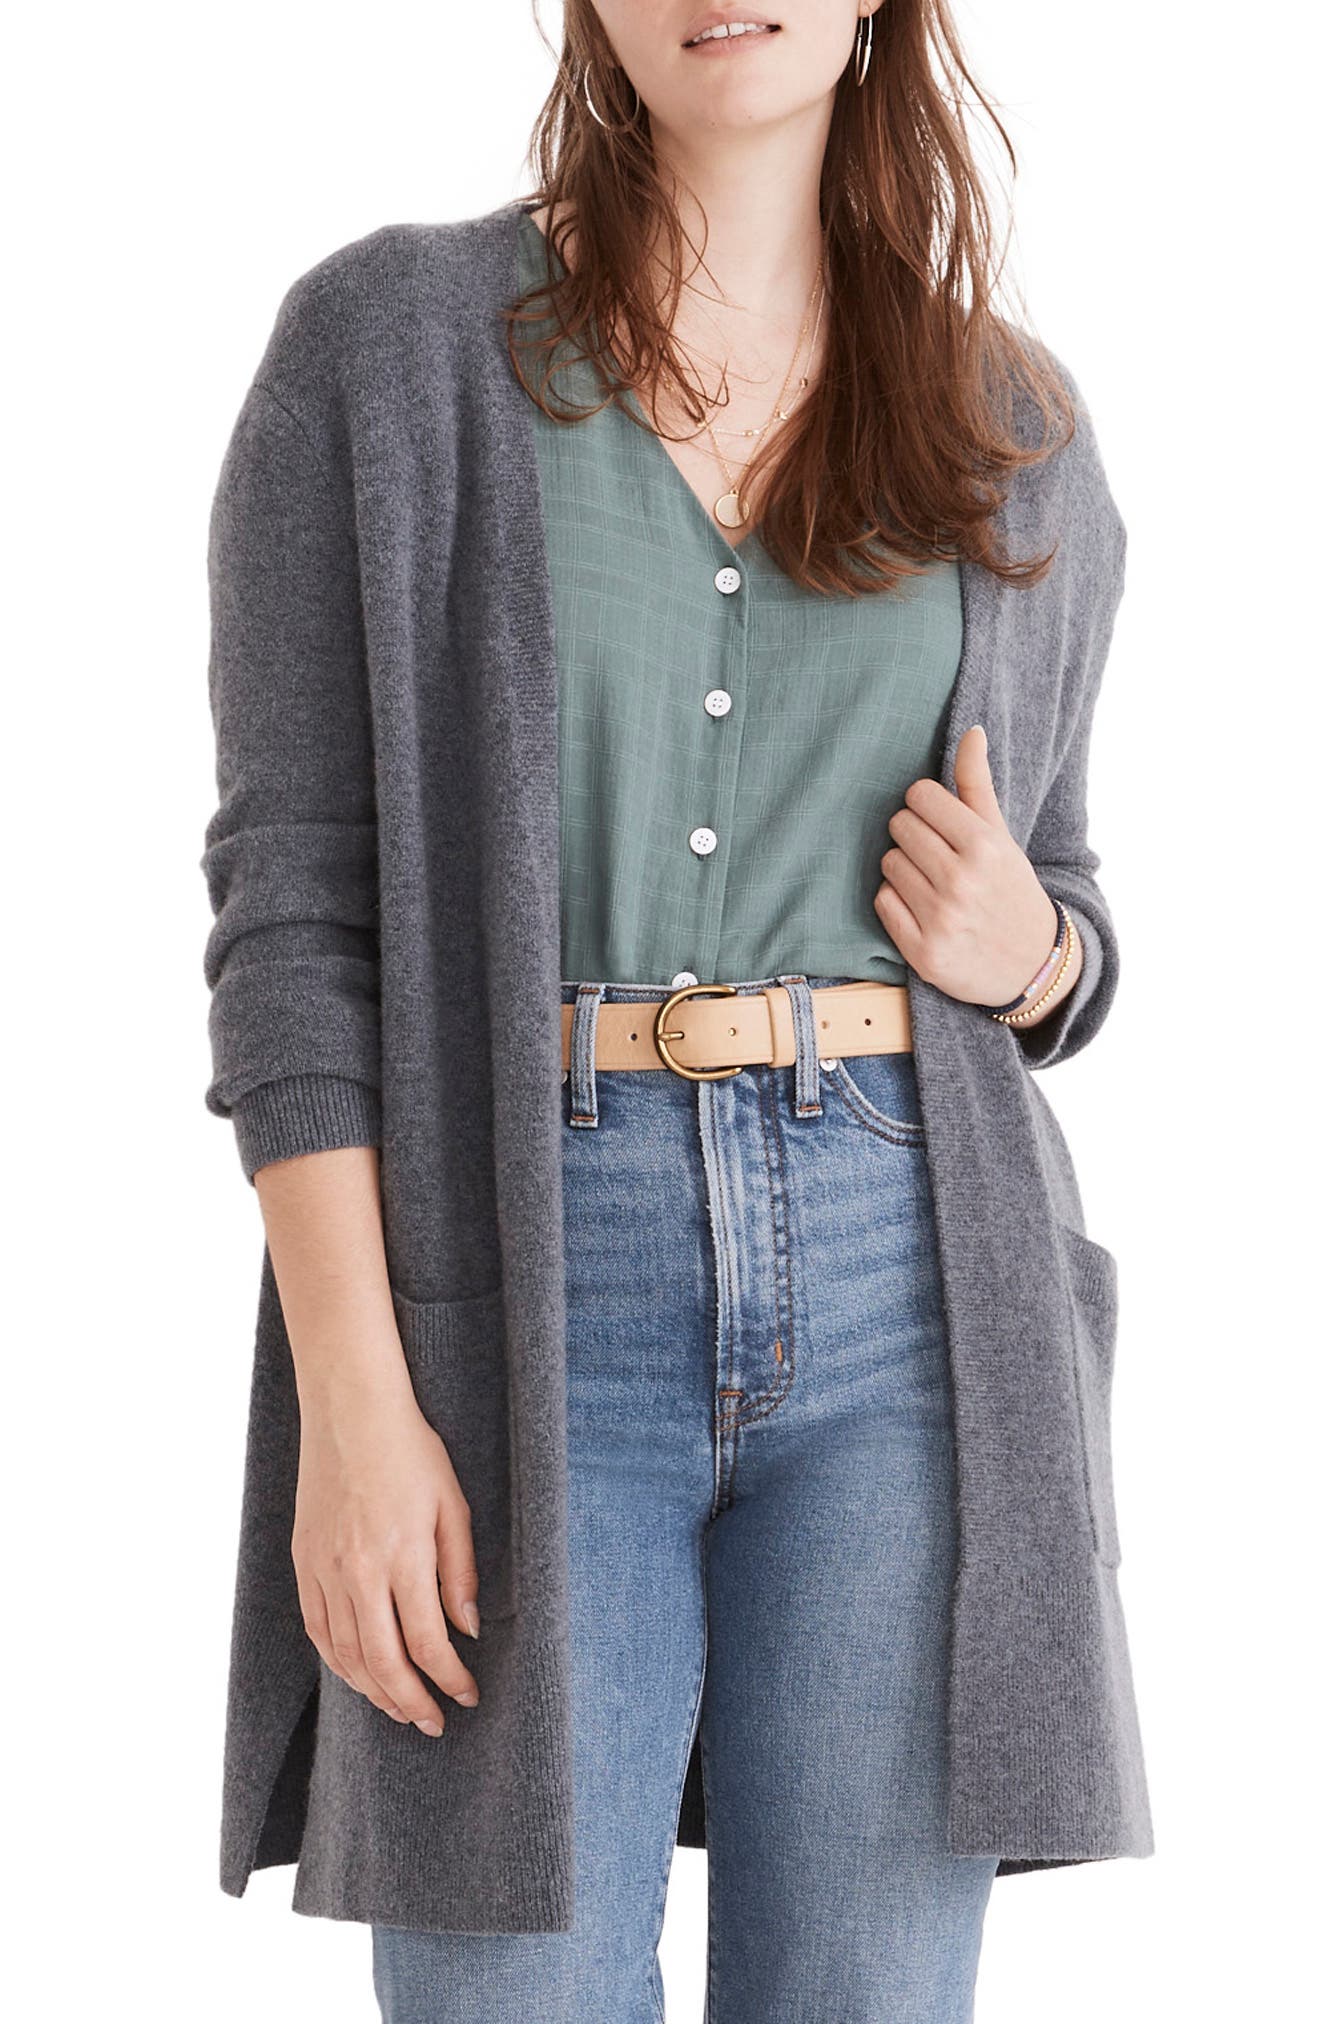 L/XL/1X-2X-3X NEW Plus Size 3/4 Sleeve Button Cardigan Sweater Cotton Blend 